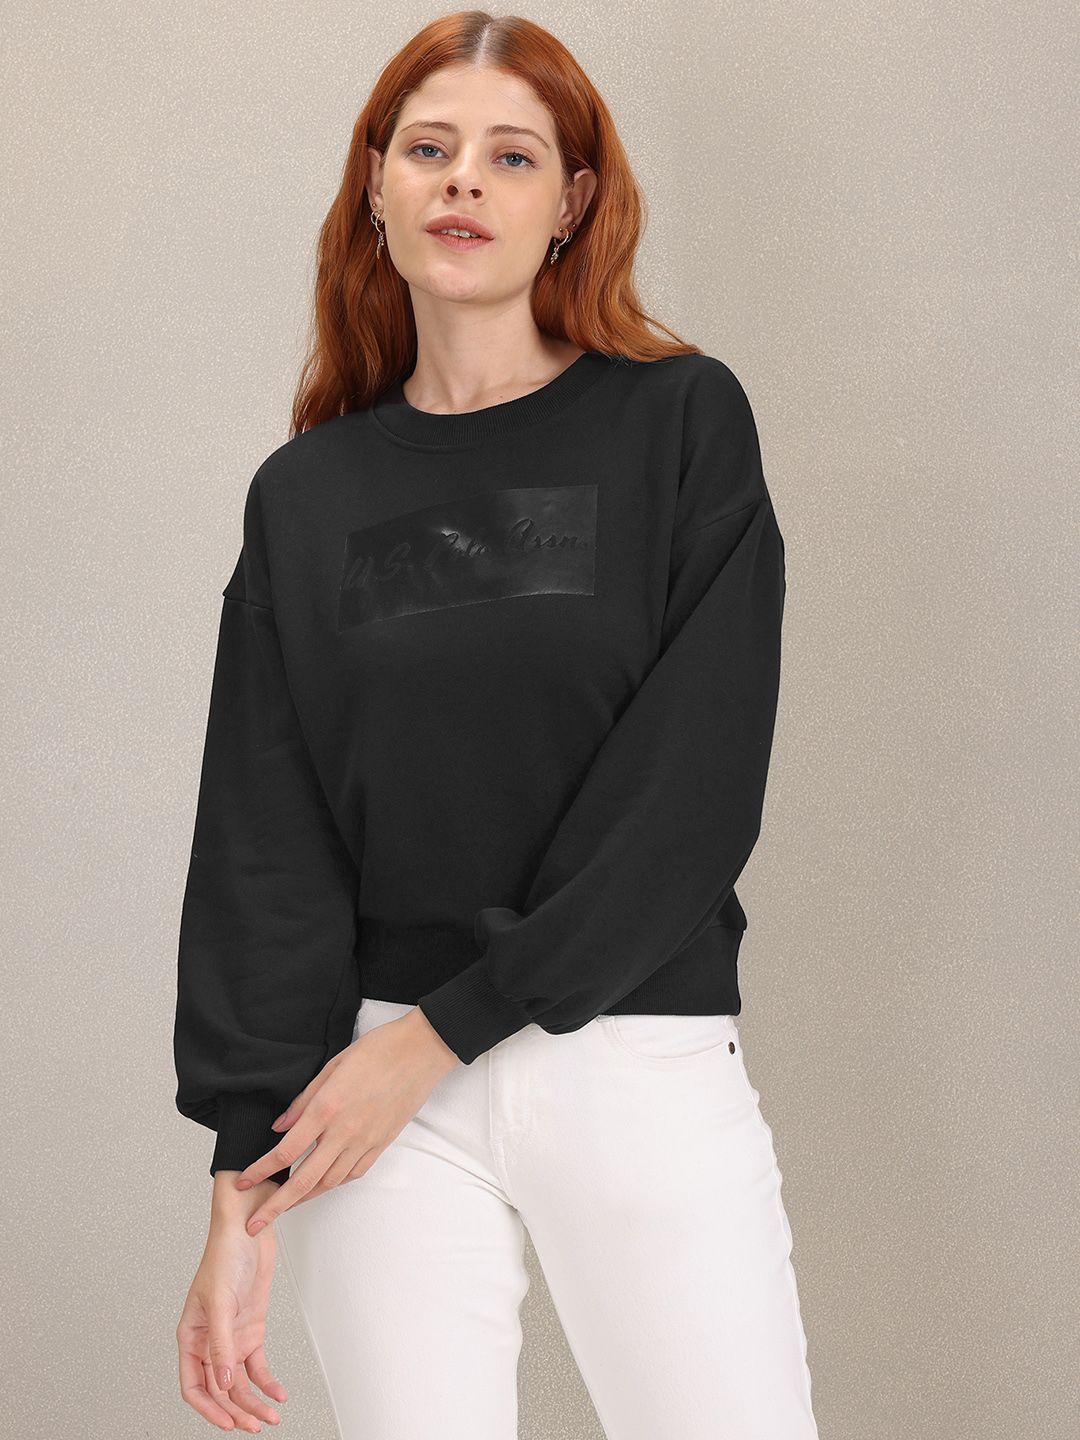 u s polo assn women women black brand logo print sweatshirt